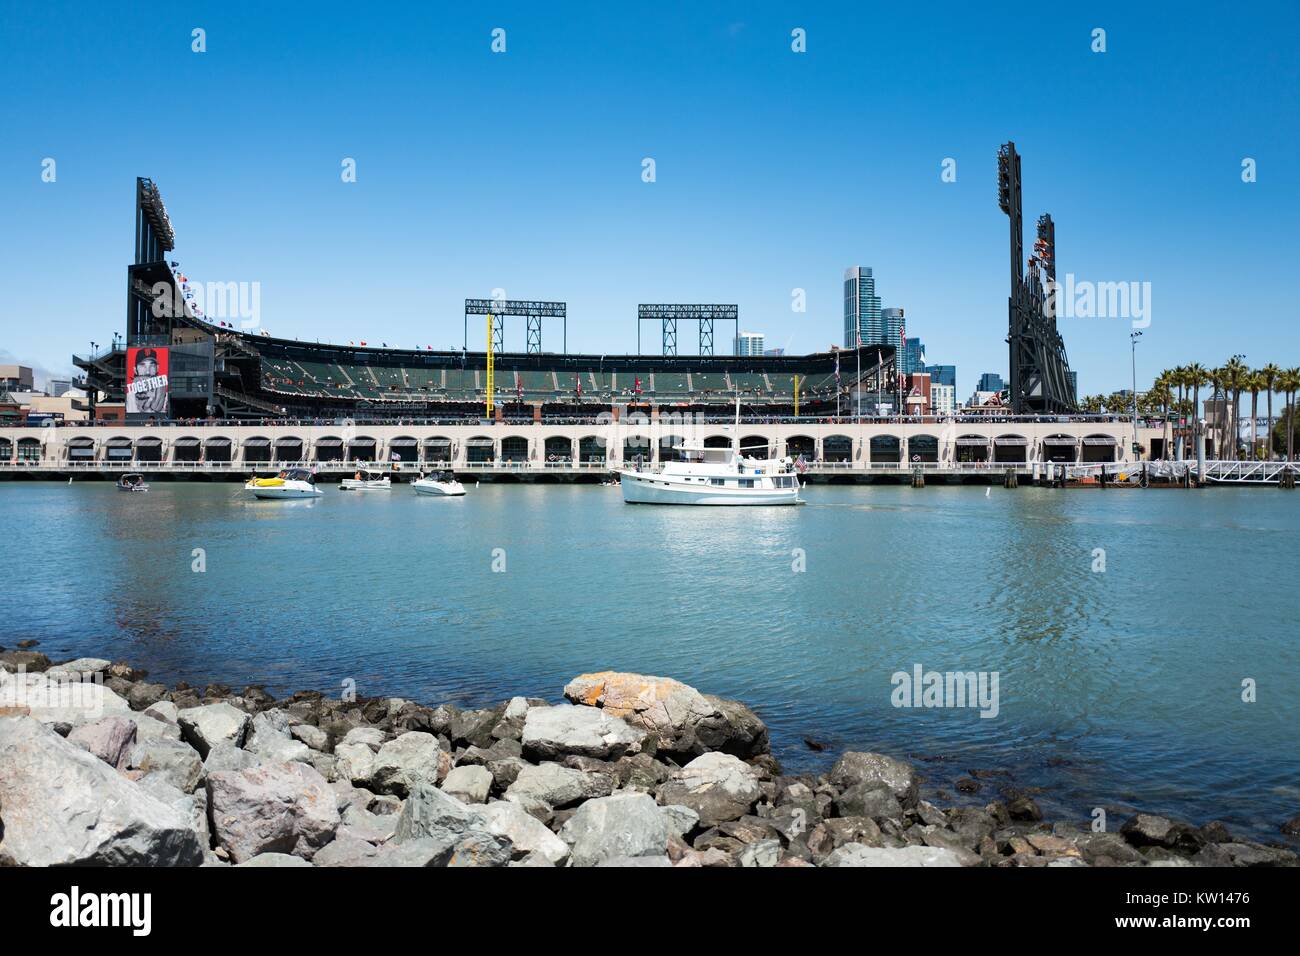 ATT Park baseball Stadium, domicile de l'équipe de baseball des Giants de San Francisco, vu de l'ensemble McCovey Cove, San Francisco, Californie, 2016. Banque D'Images